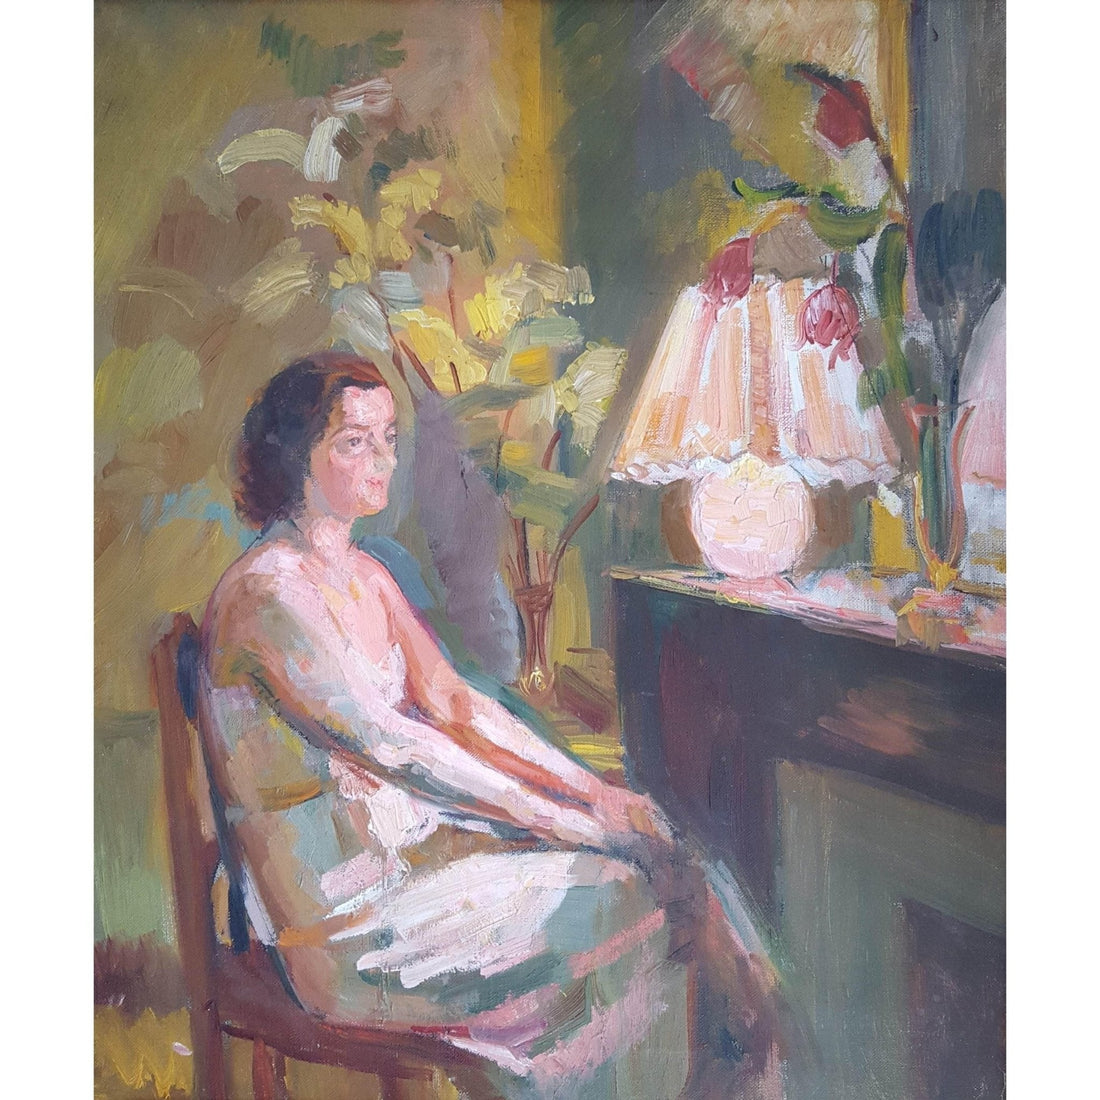 Augusta de Bourgade – Femme devant le foyer – Circa 1930 - Winckelmann Gallery